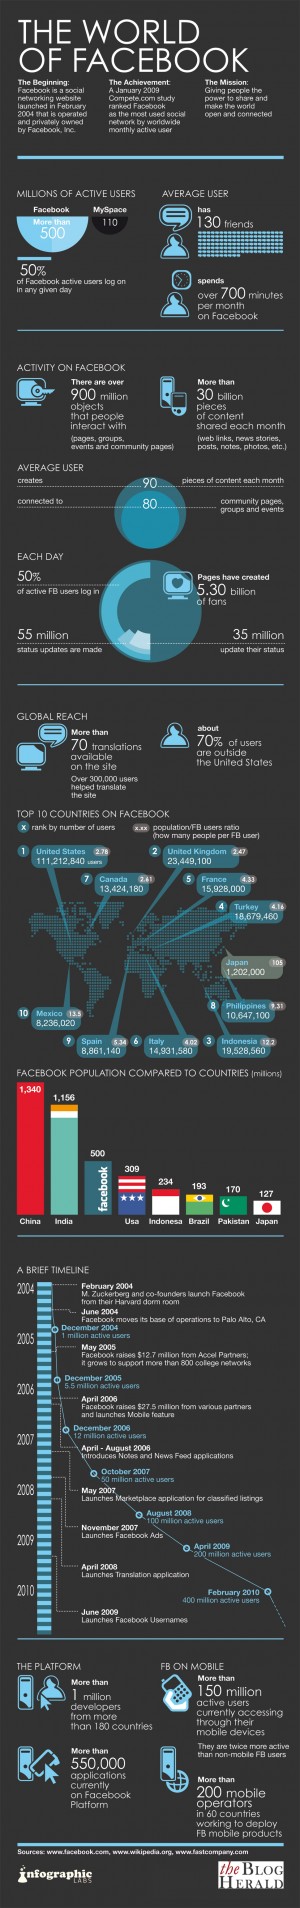 infographic-facebook-domination